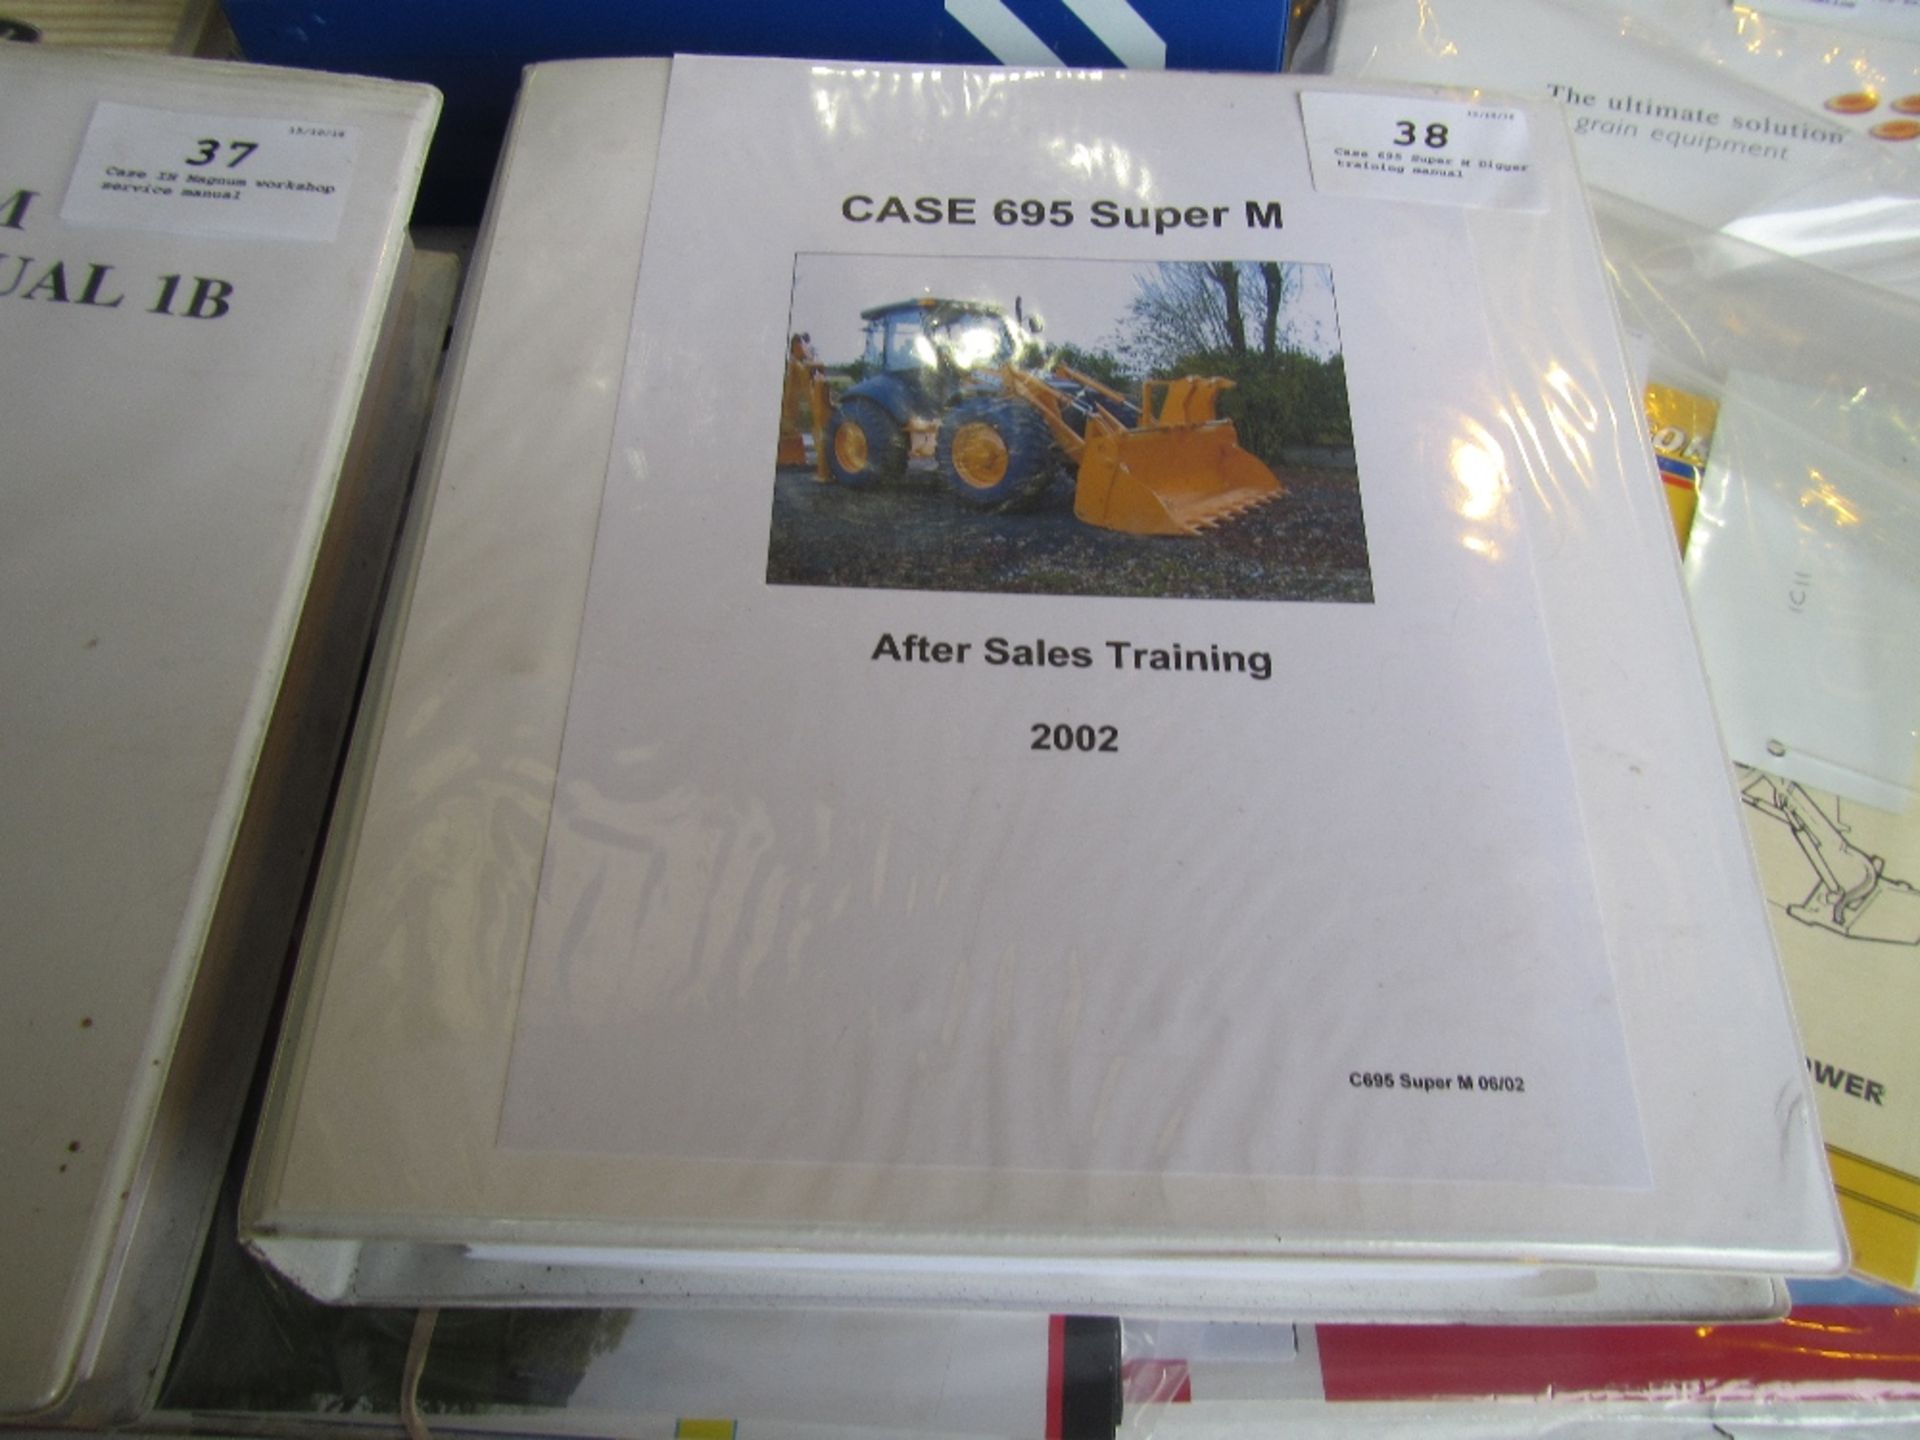 Case 695 Super M Digger training manual